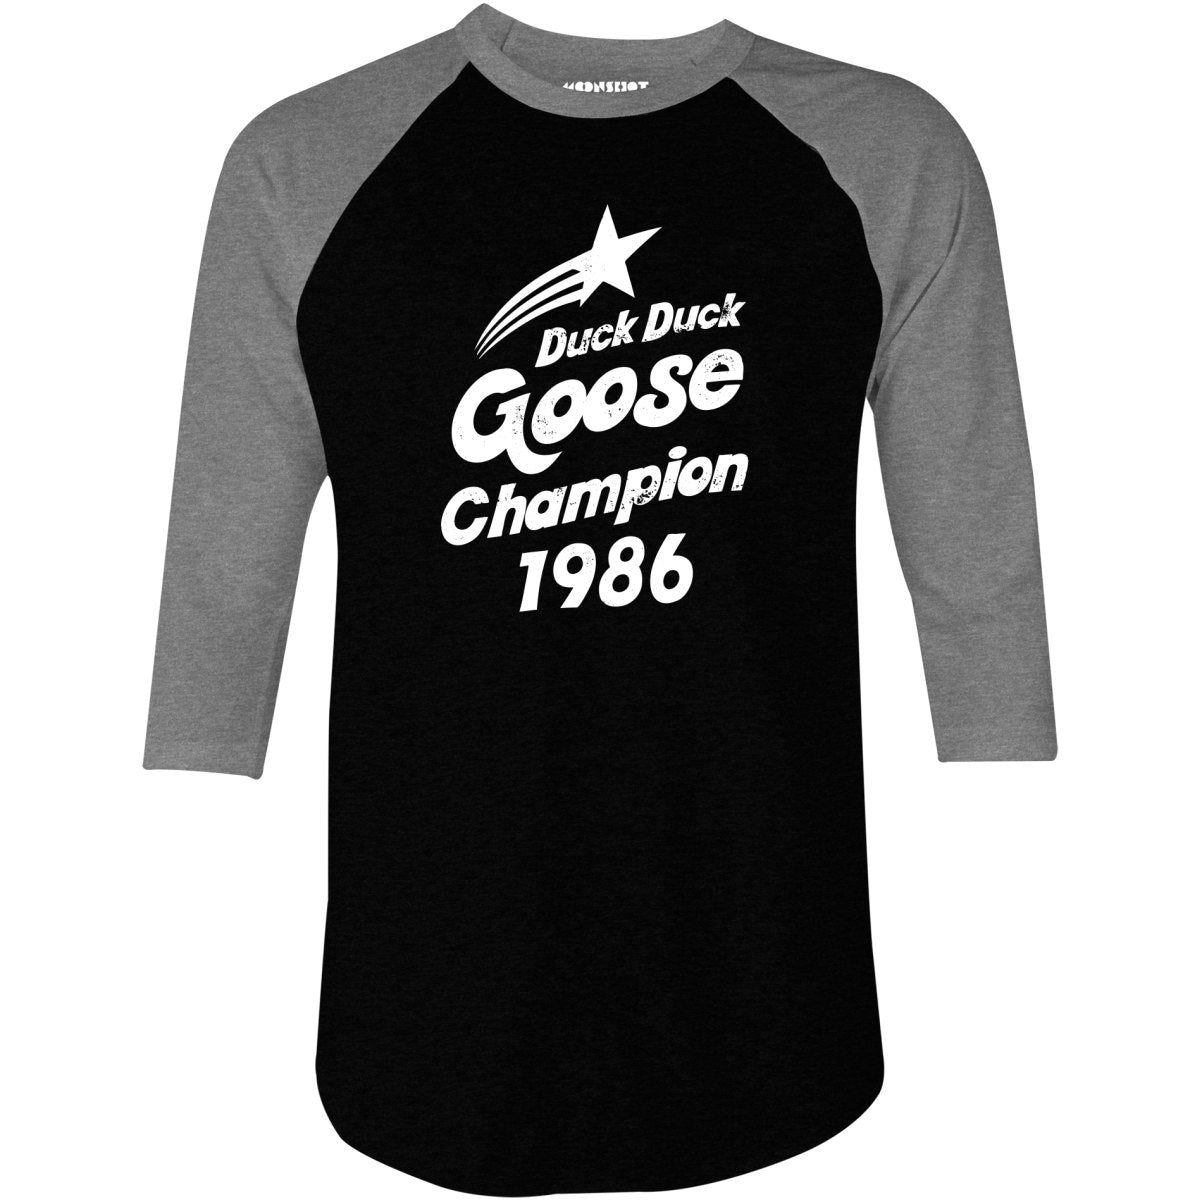 Duck Duck Goose Champion 1986 - 3/4 Sleeve Raglan T-Shirt